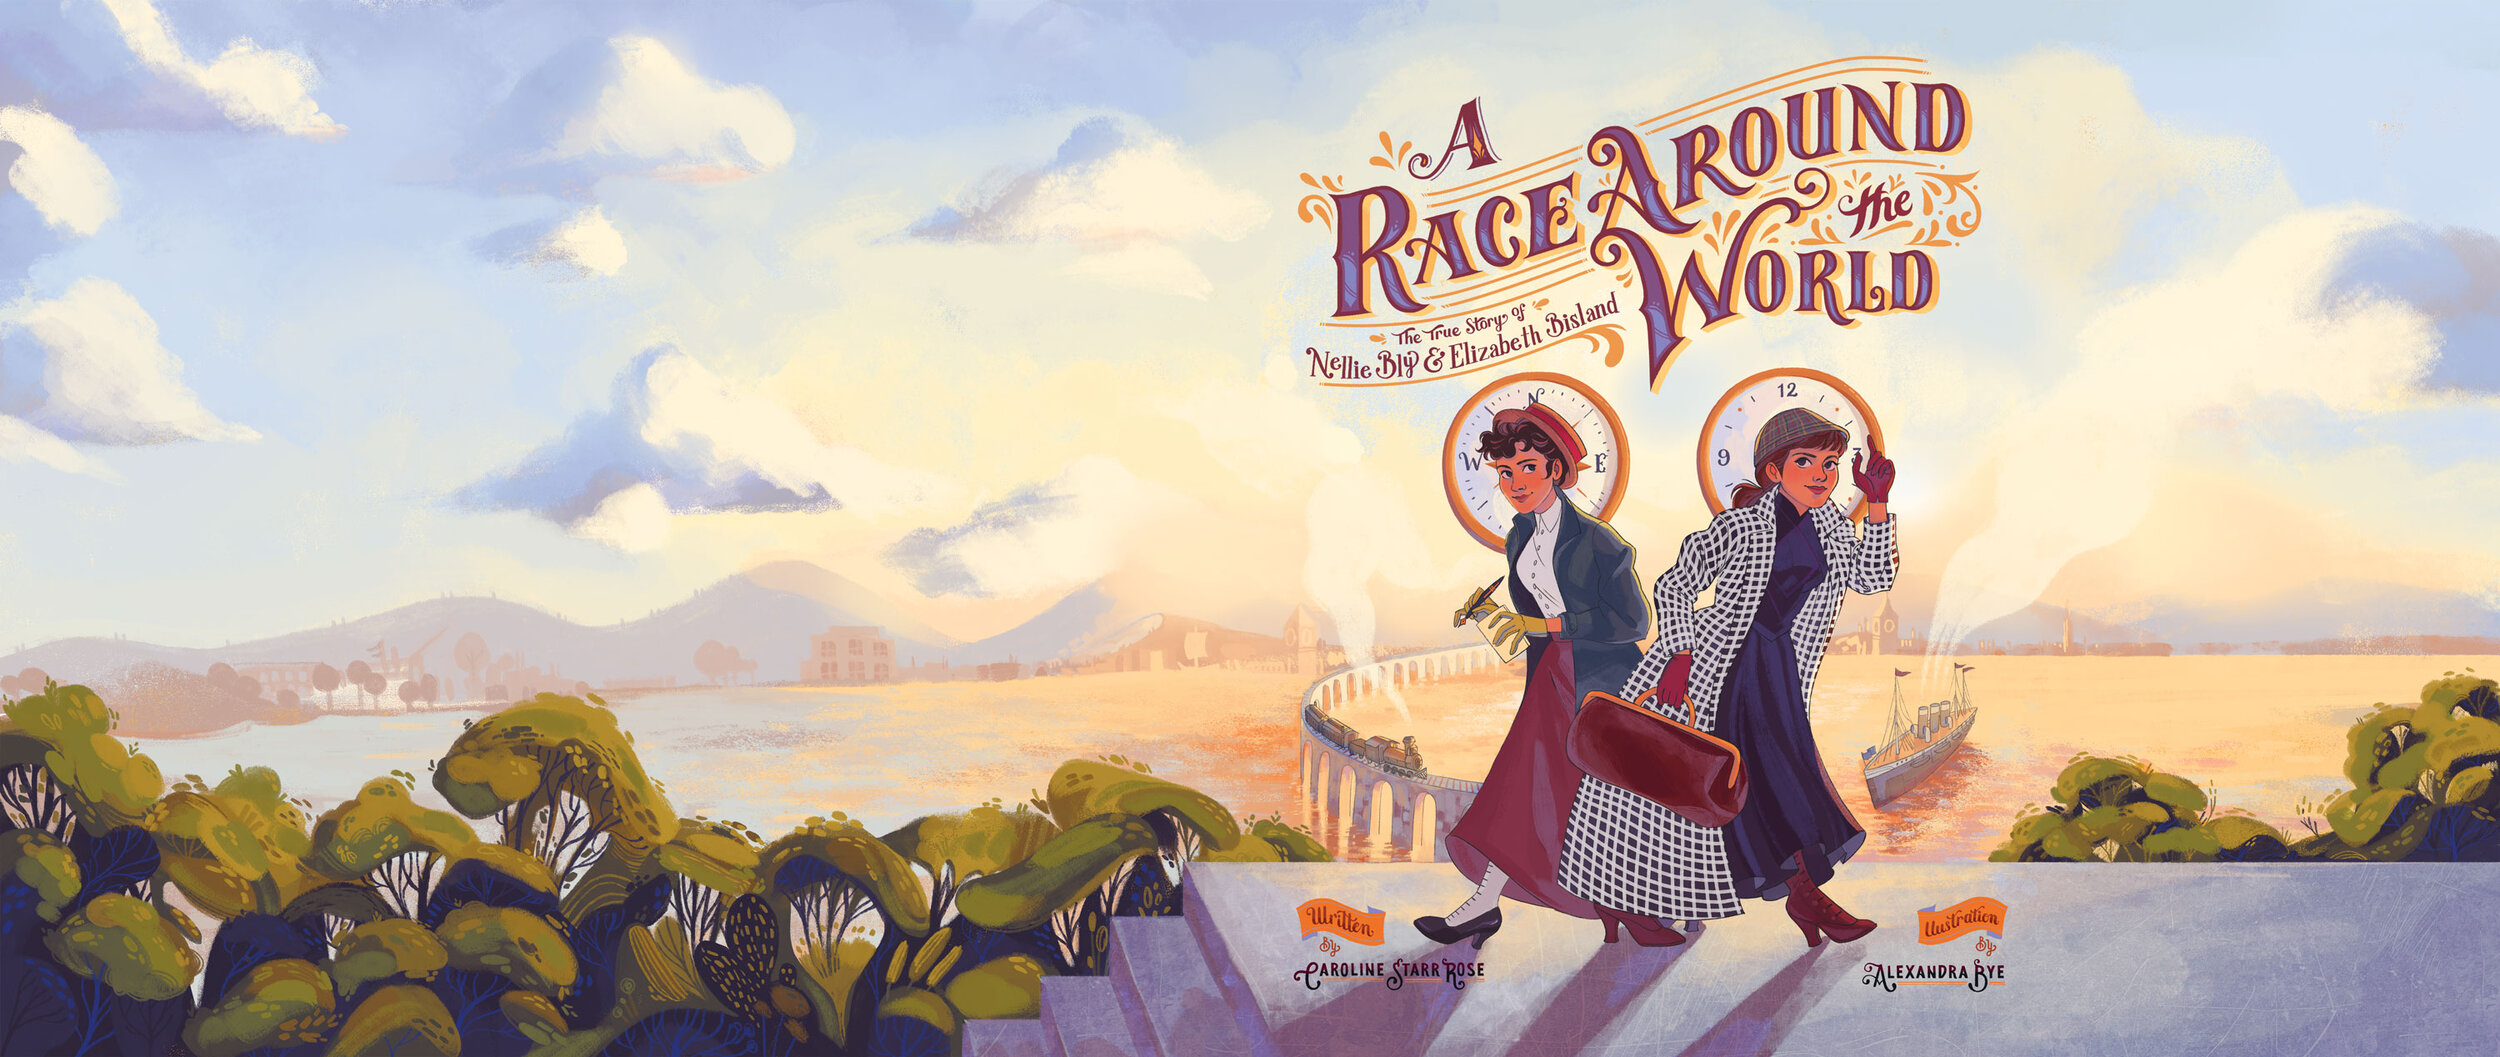 Race-around-the-world_-cover-final_CMYK.jpg